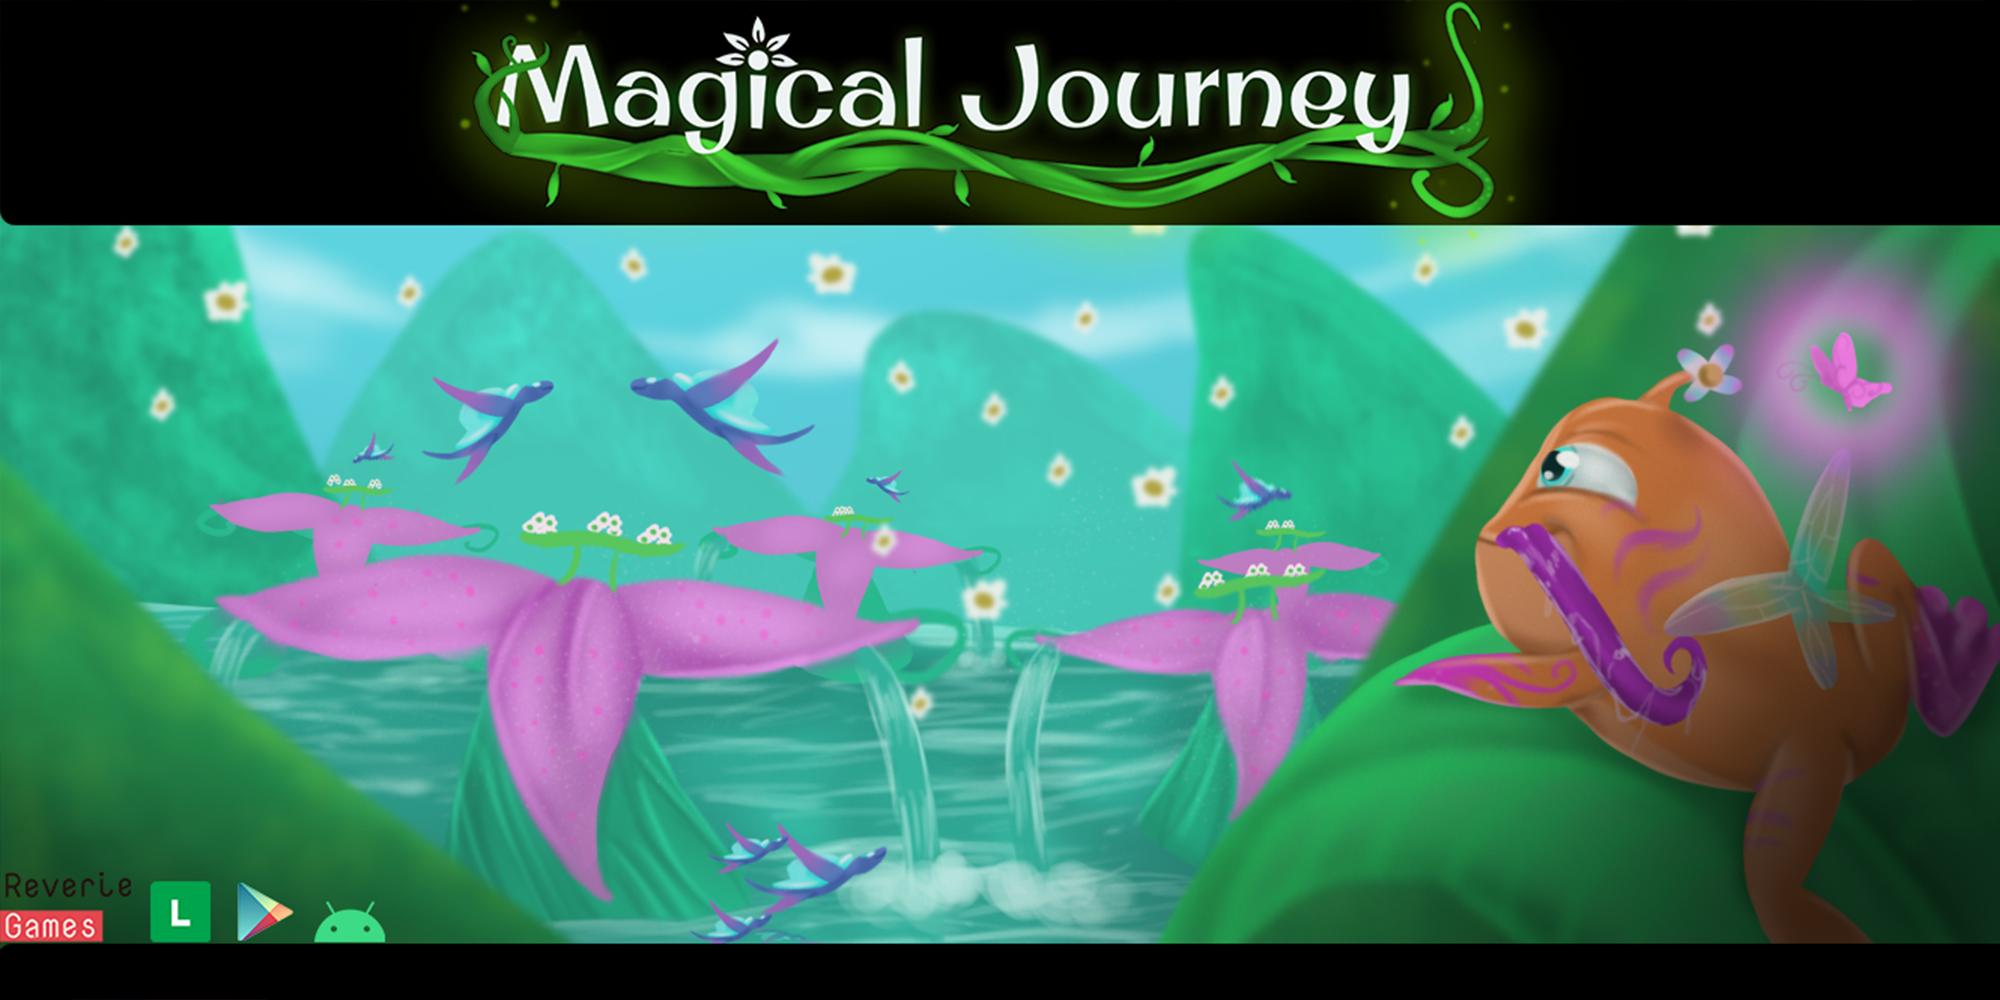 Magic journey